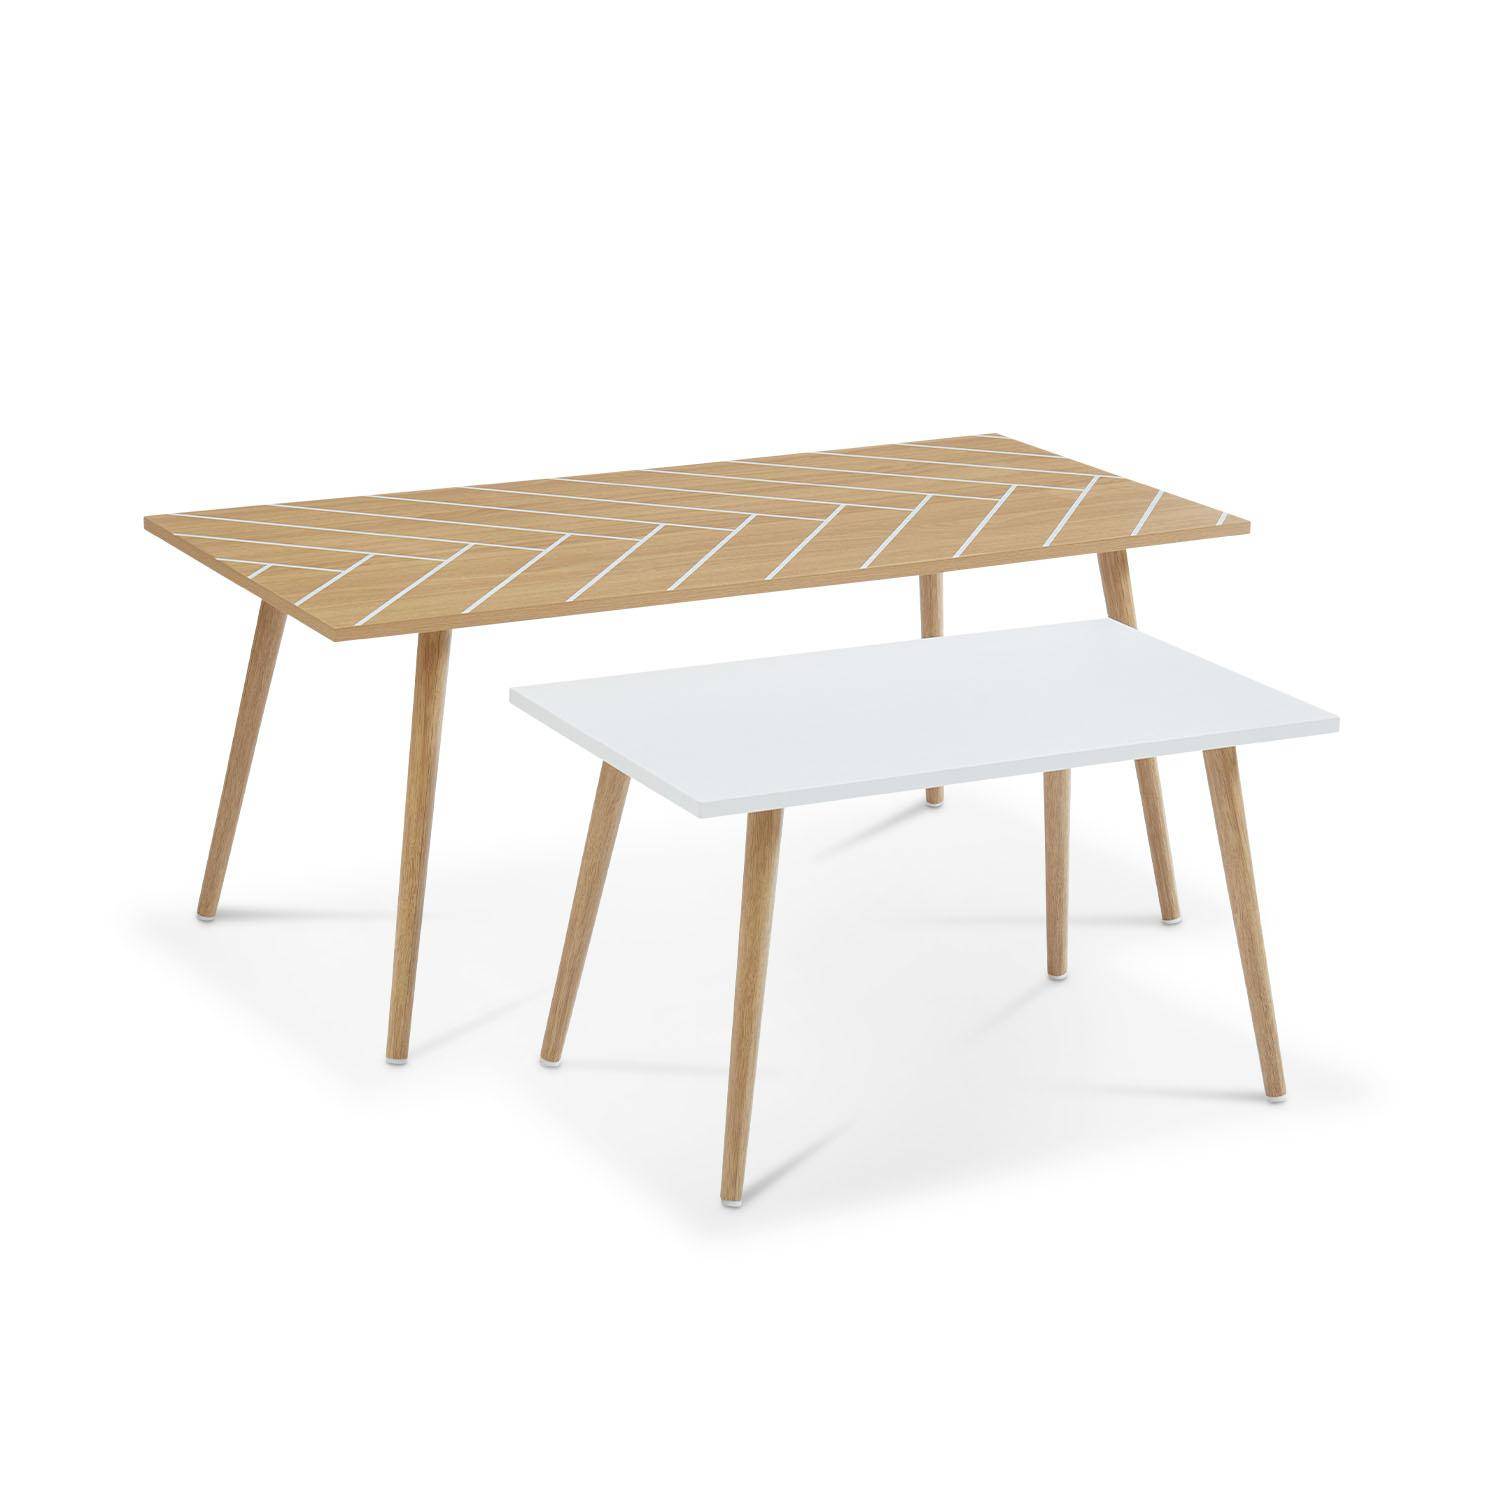 Conjunto de 2 mesas de centro natural y blanco - 110x50x45,5cm y 70x40x39cm - Etnik - base de madera maciza de eucalipto, diseño escandinavo Photo1